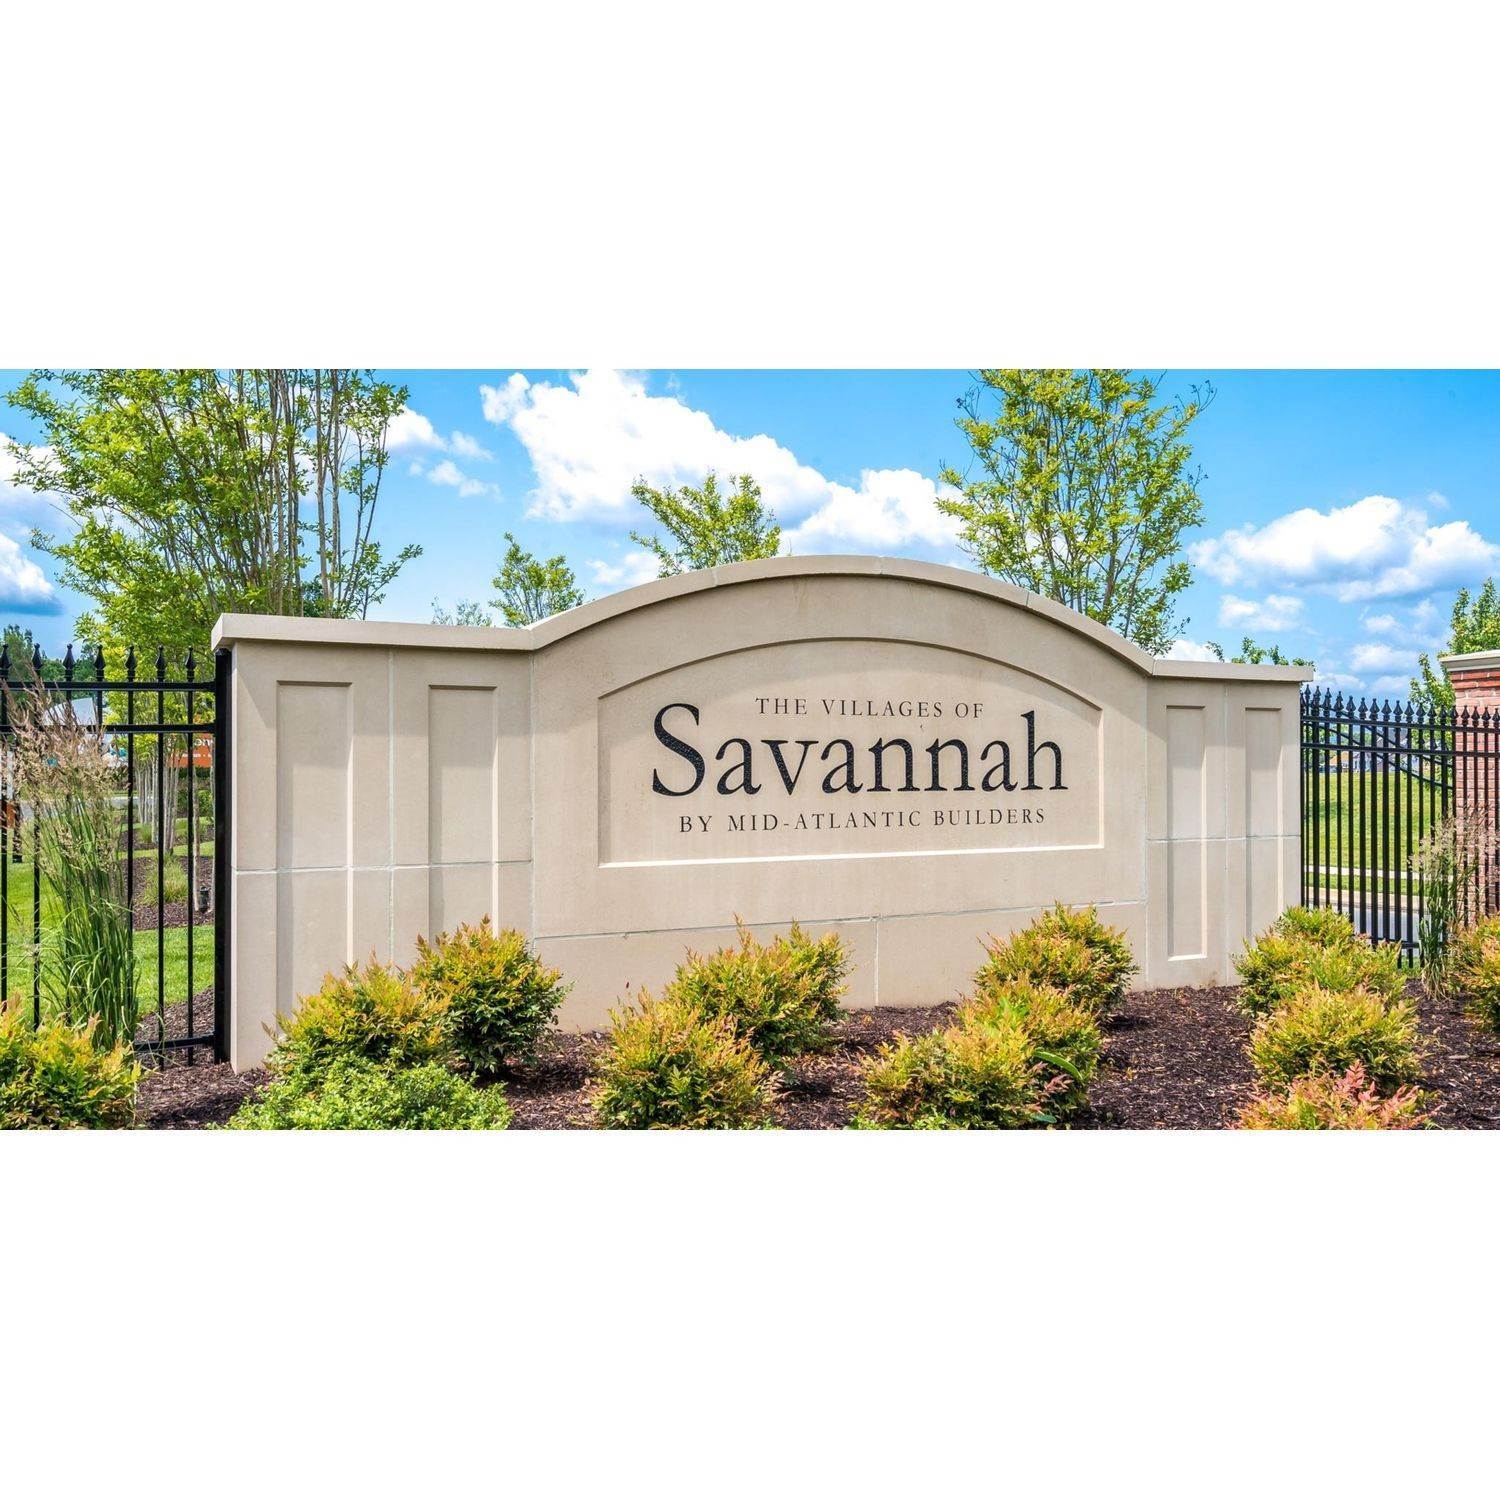 4. The Villages of Savannah building at 6703 Savannah Drive, Brandywine, MD 20613